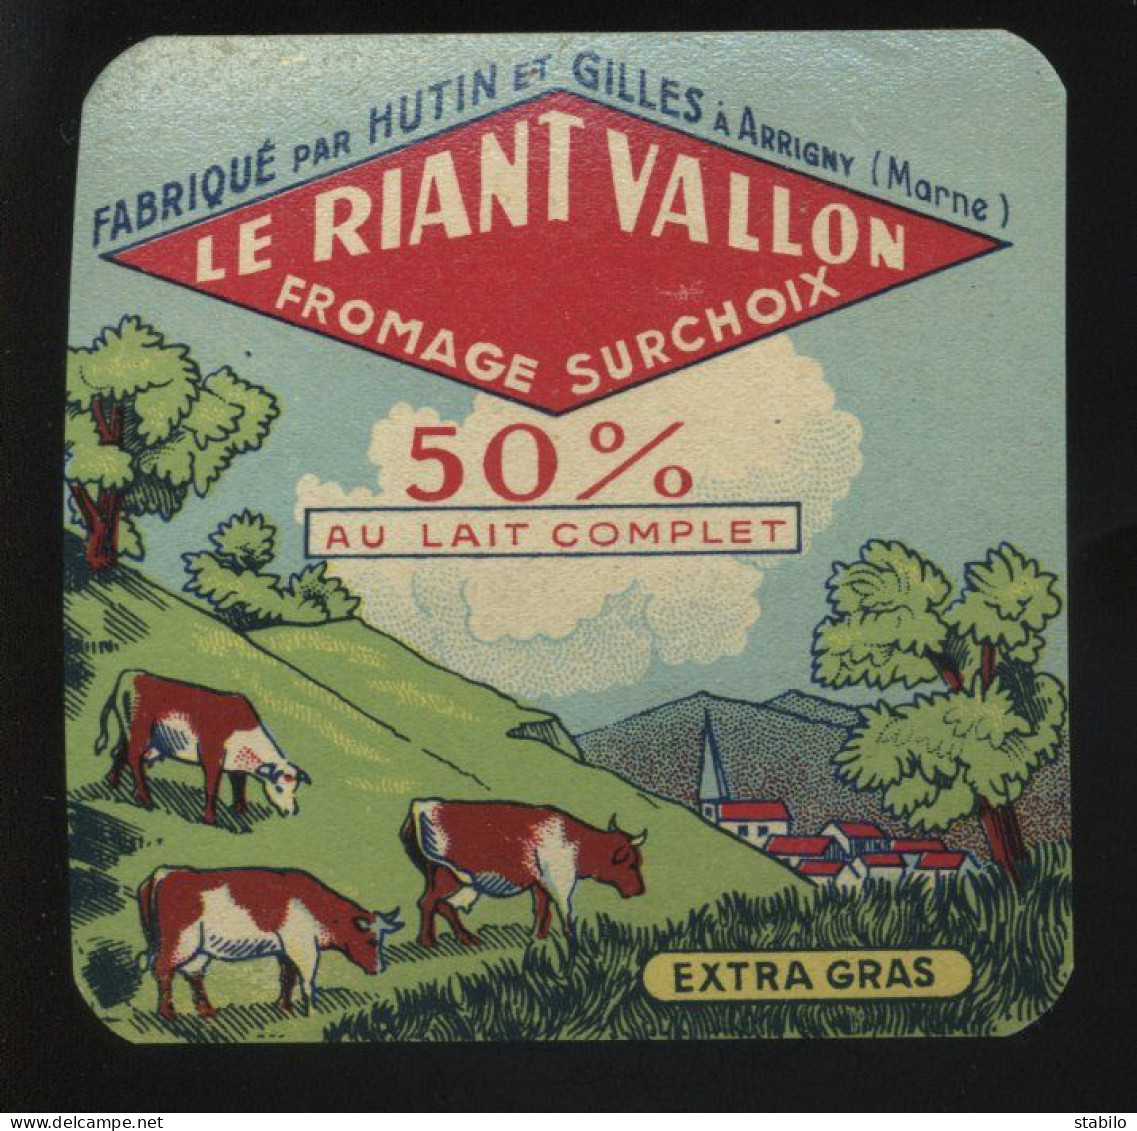 ETIQUETTE DE FROMAGE - LE RIANT VALLON - FROMAGERIE HUTIN ET GILLES, ARRIGNY (MARNE) - Cheese